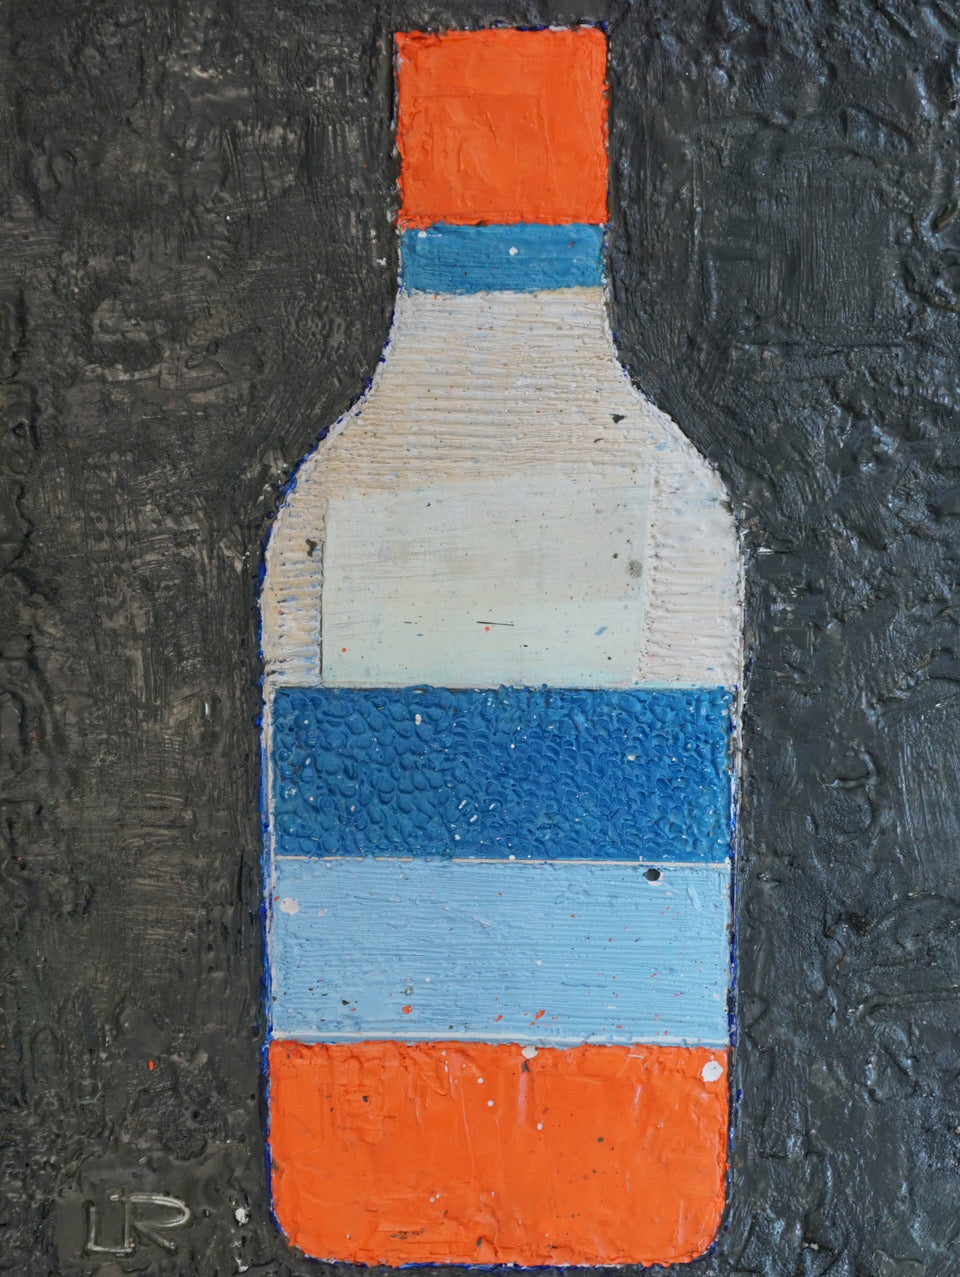 Laurie Frank Rosenwald, "acoflaska (bottle)"